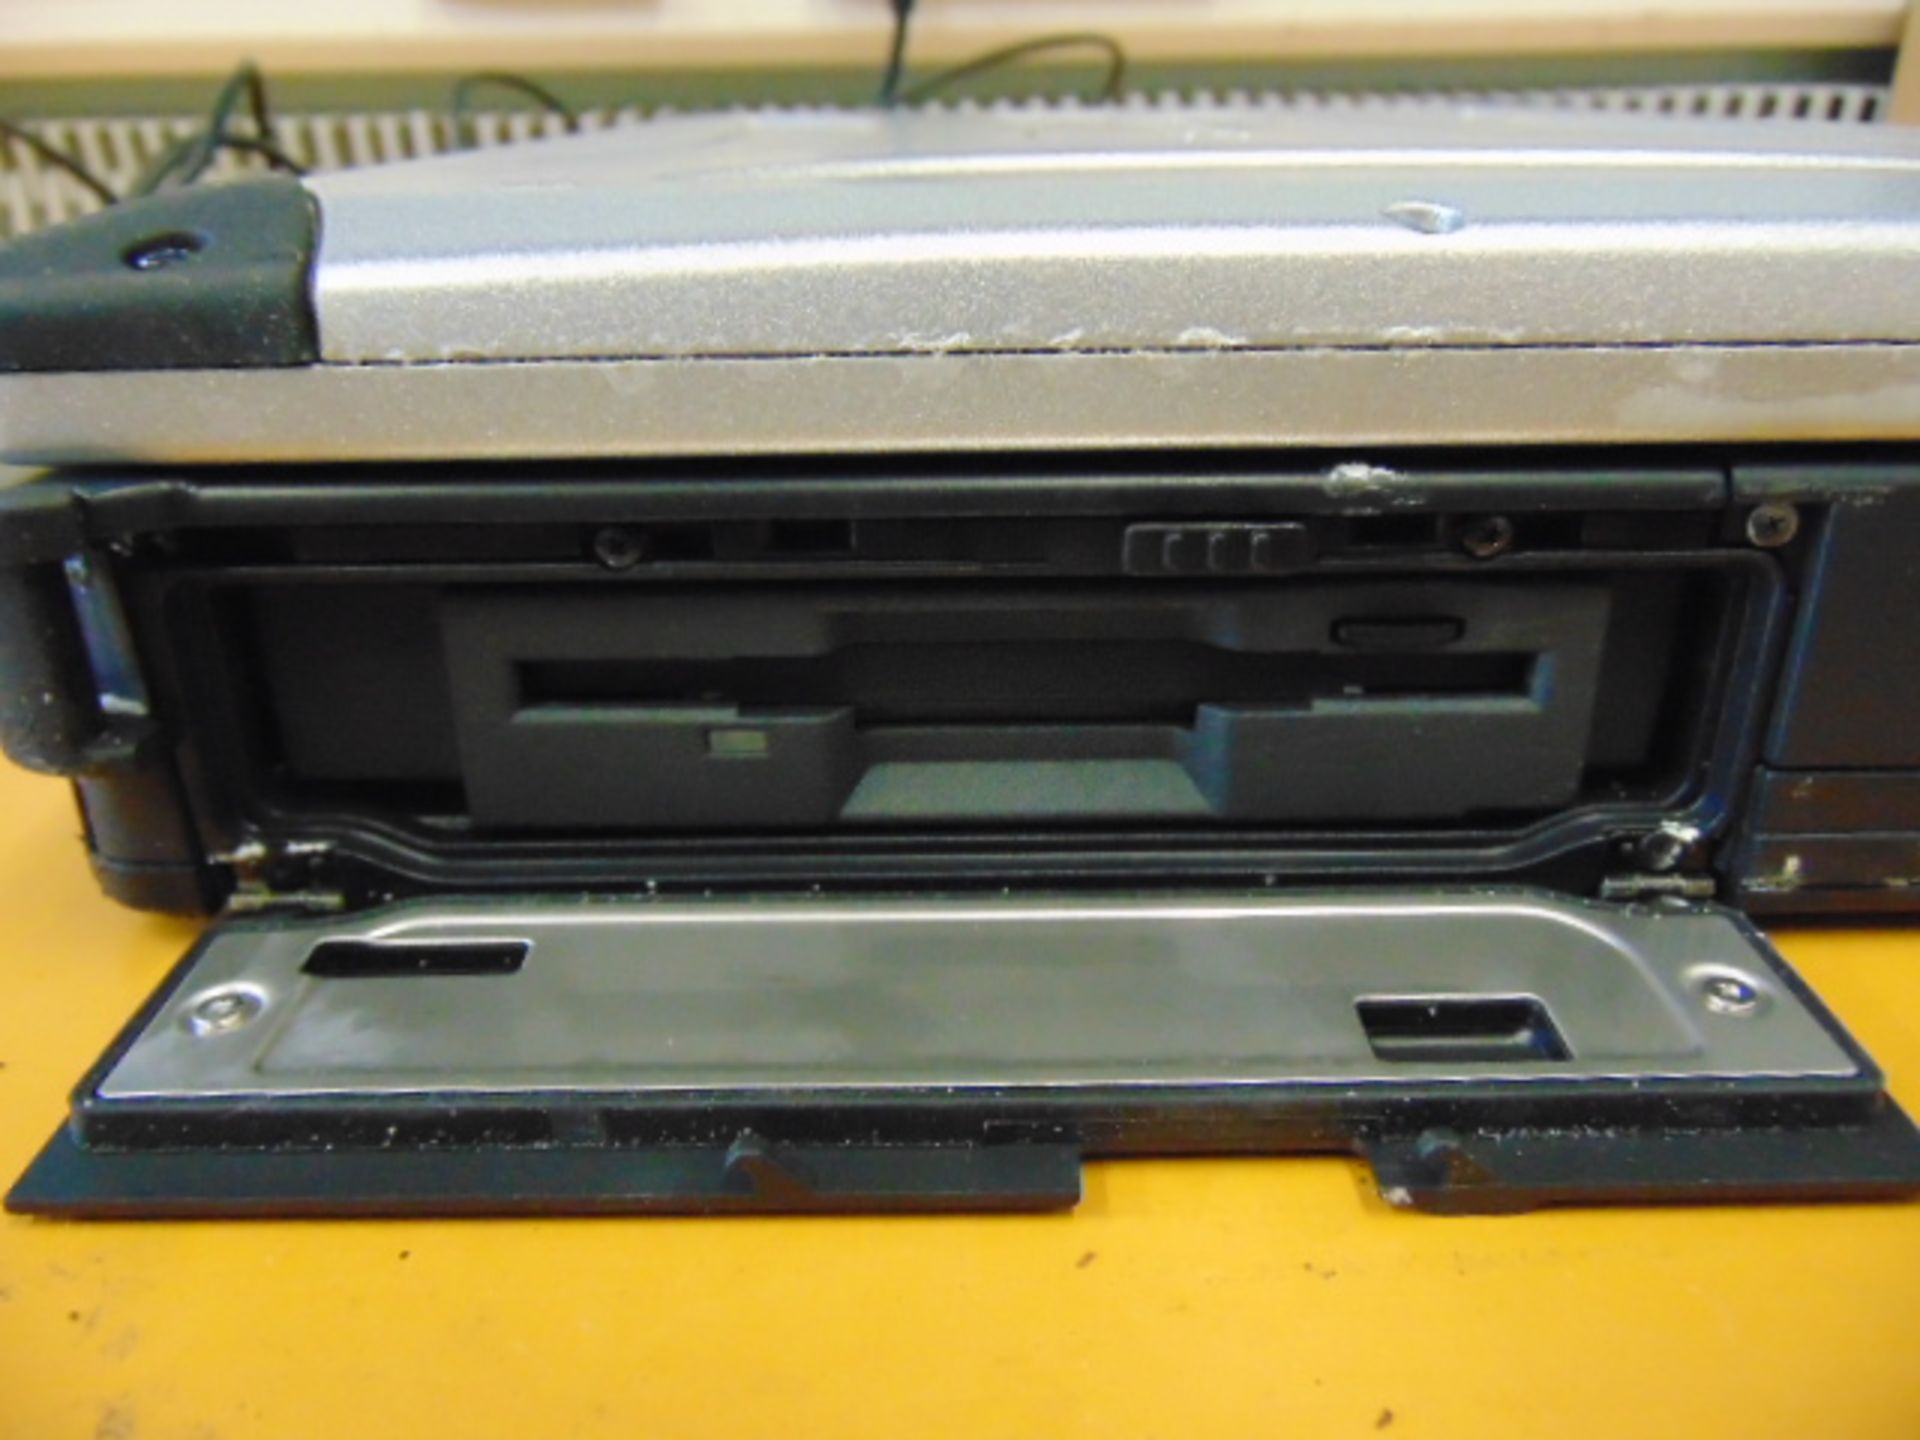 Panasonic CF-28 Toughbook Laptop - Image 13 of 15